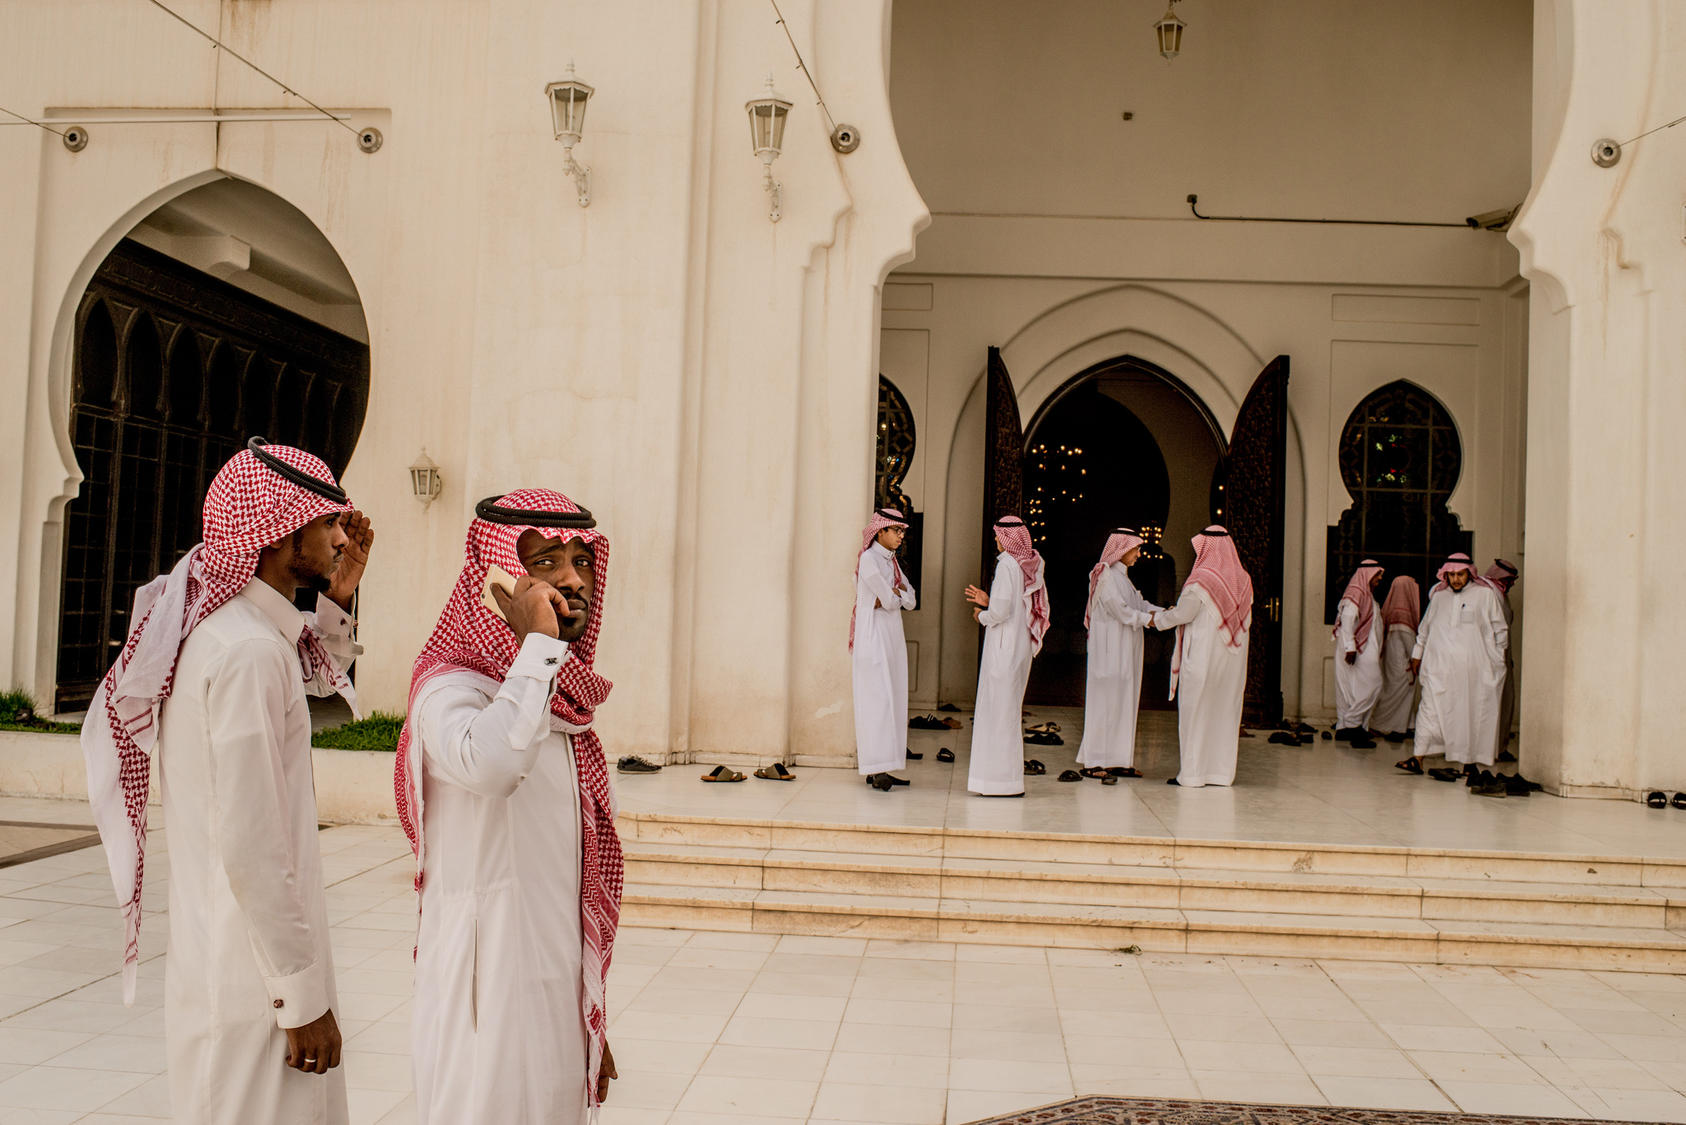 Men arrive for prayers at a mosque in Riyadh, Saudi Arabia